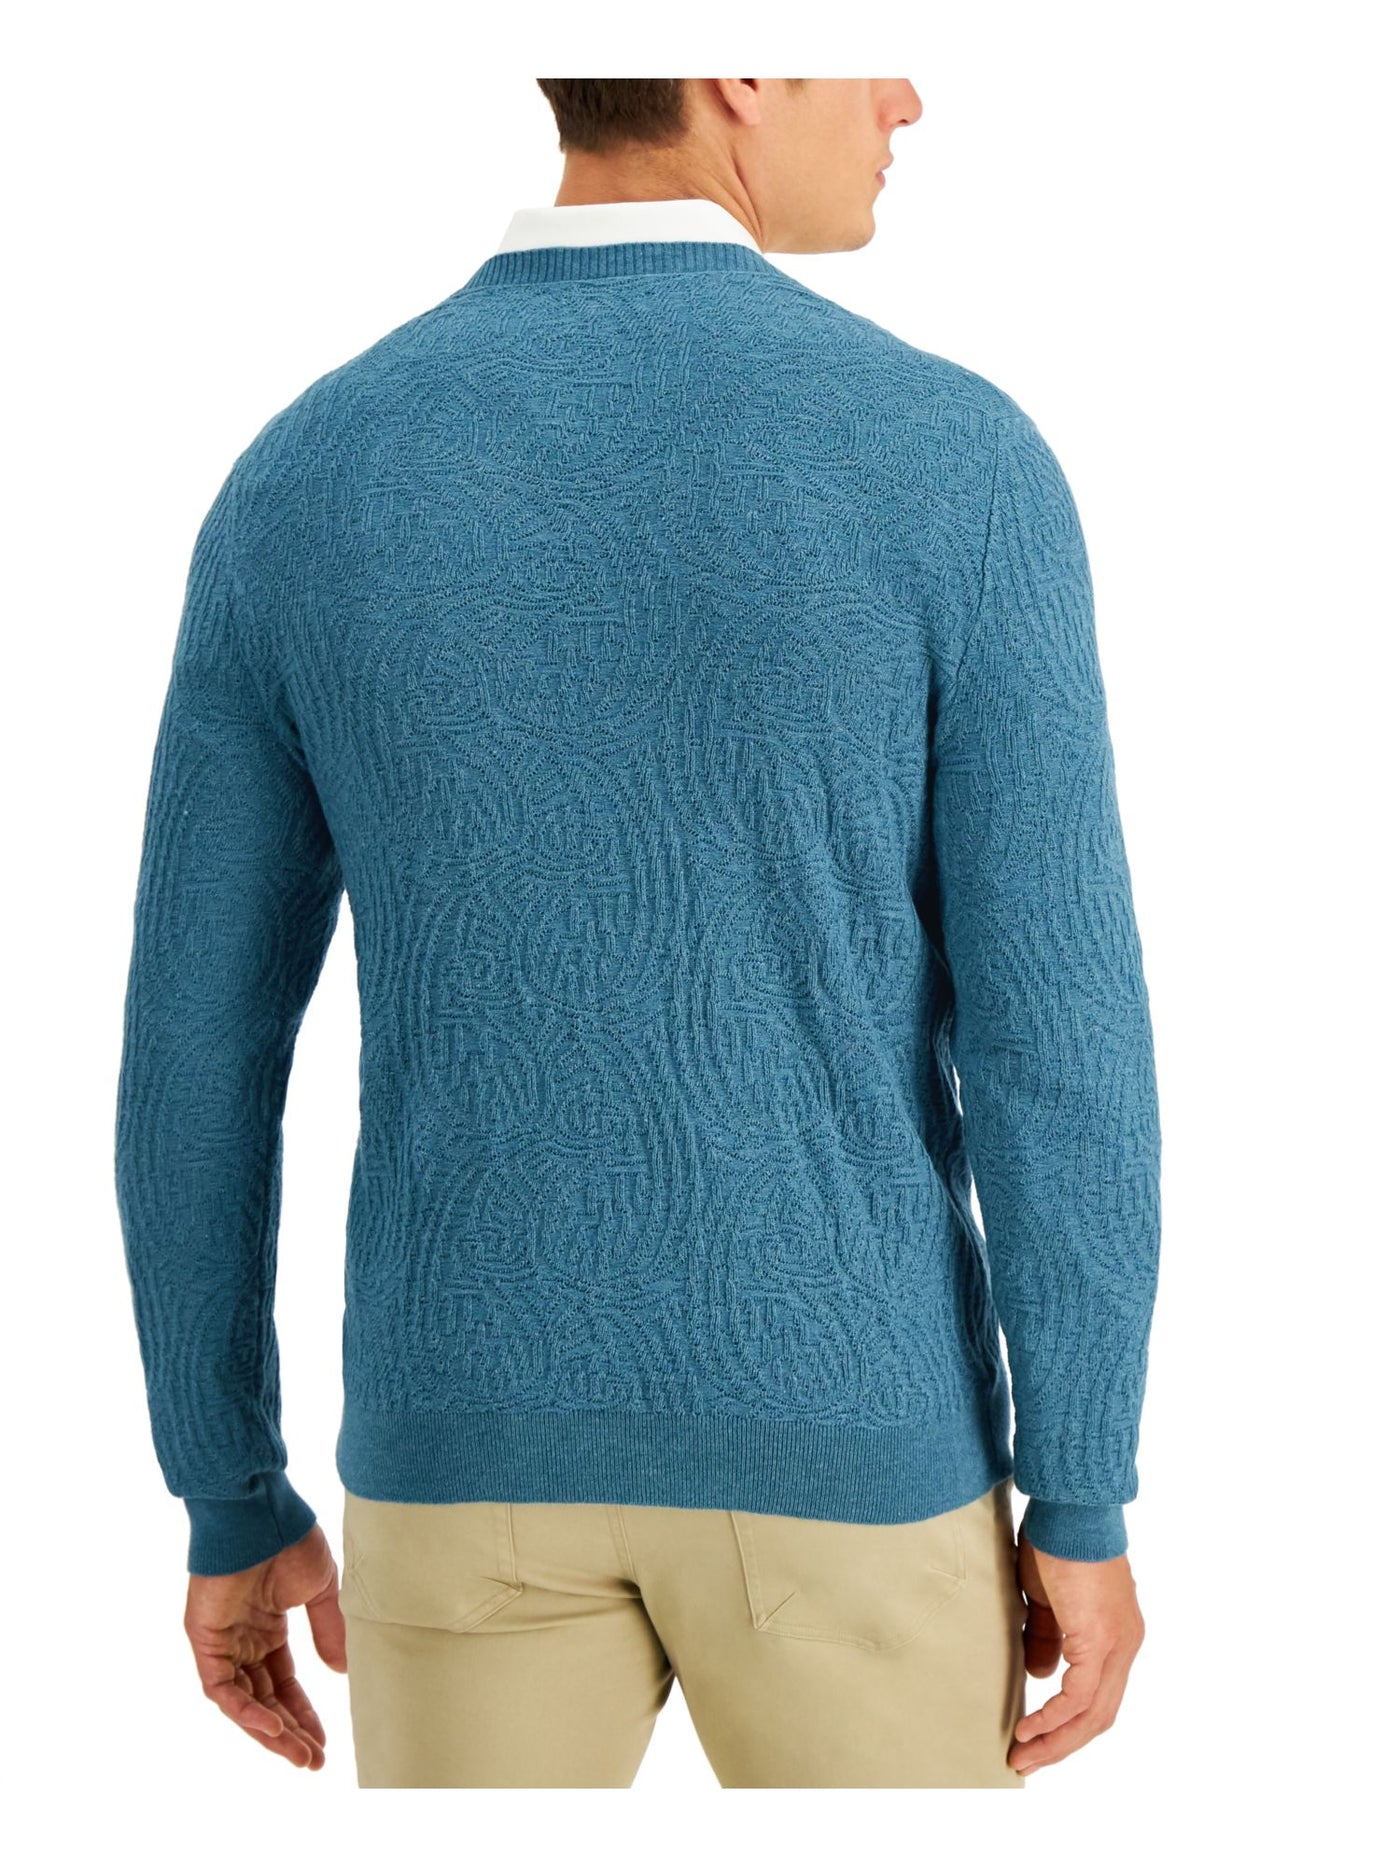 TASSO ELBA Mens Teal Crew Neck Pullover Sweater XXL